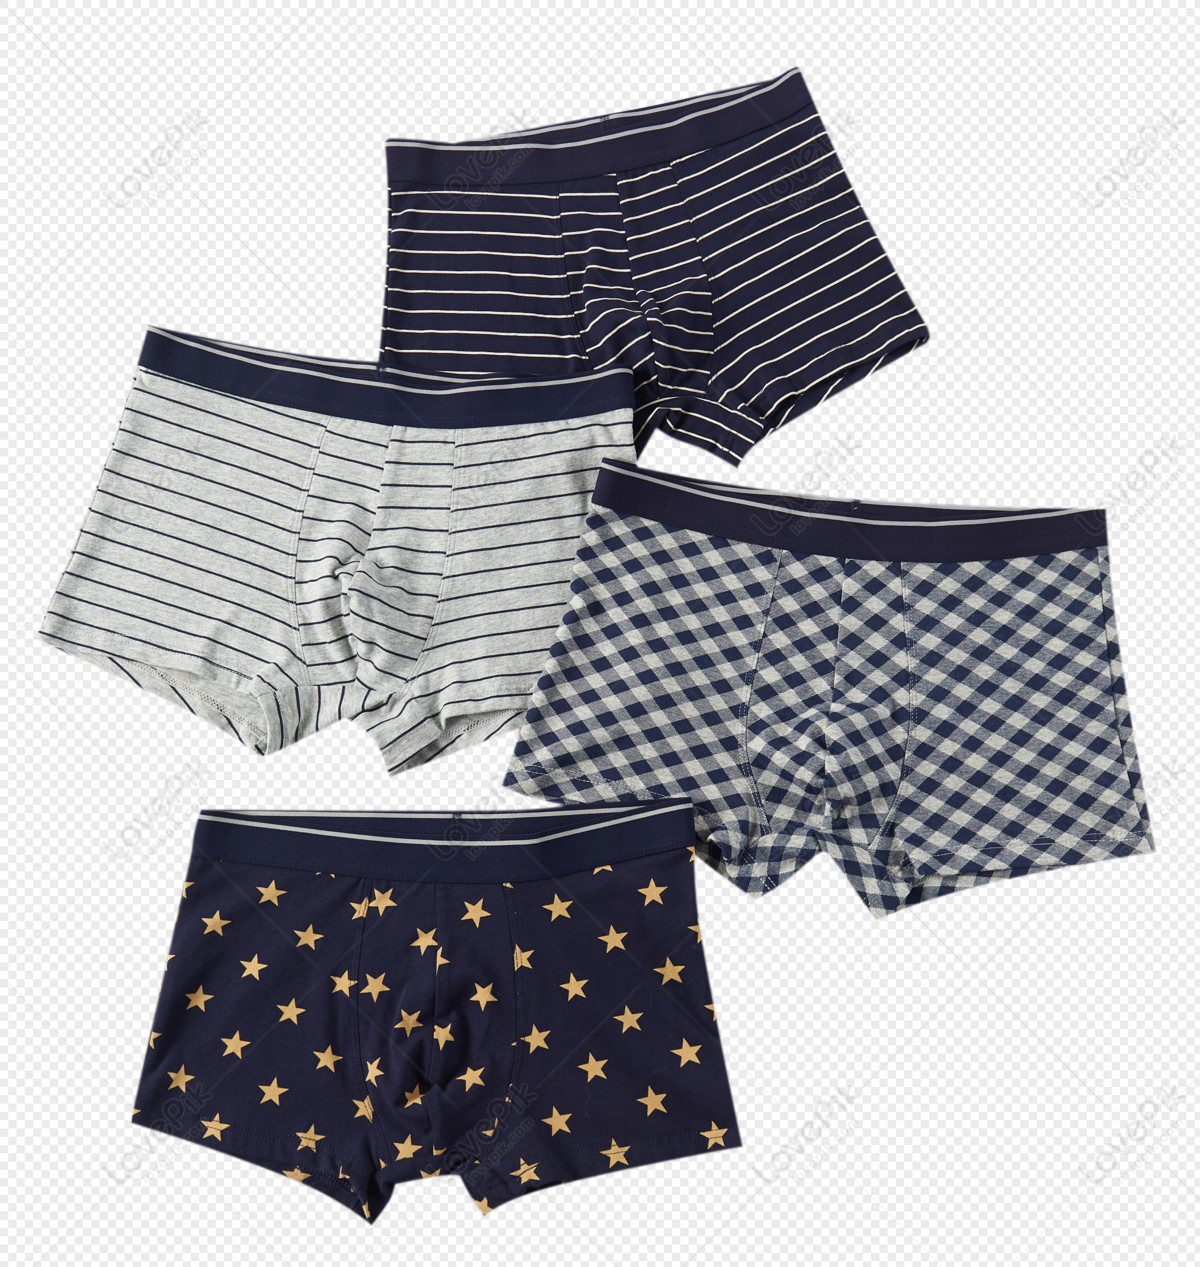 https://img.lovepik.com/free-png/20210919/lovepik-mens-underwear-png-image_400568721_wh1200.png